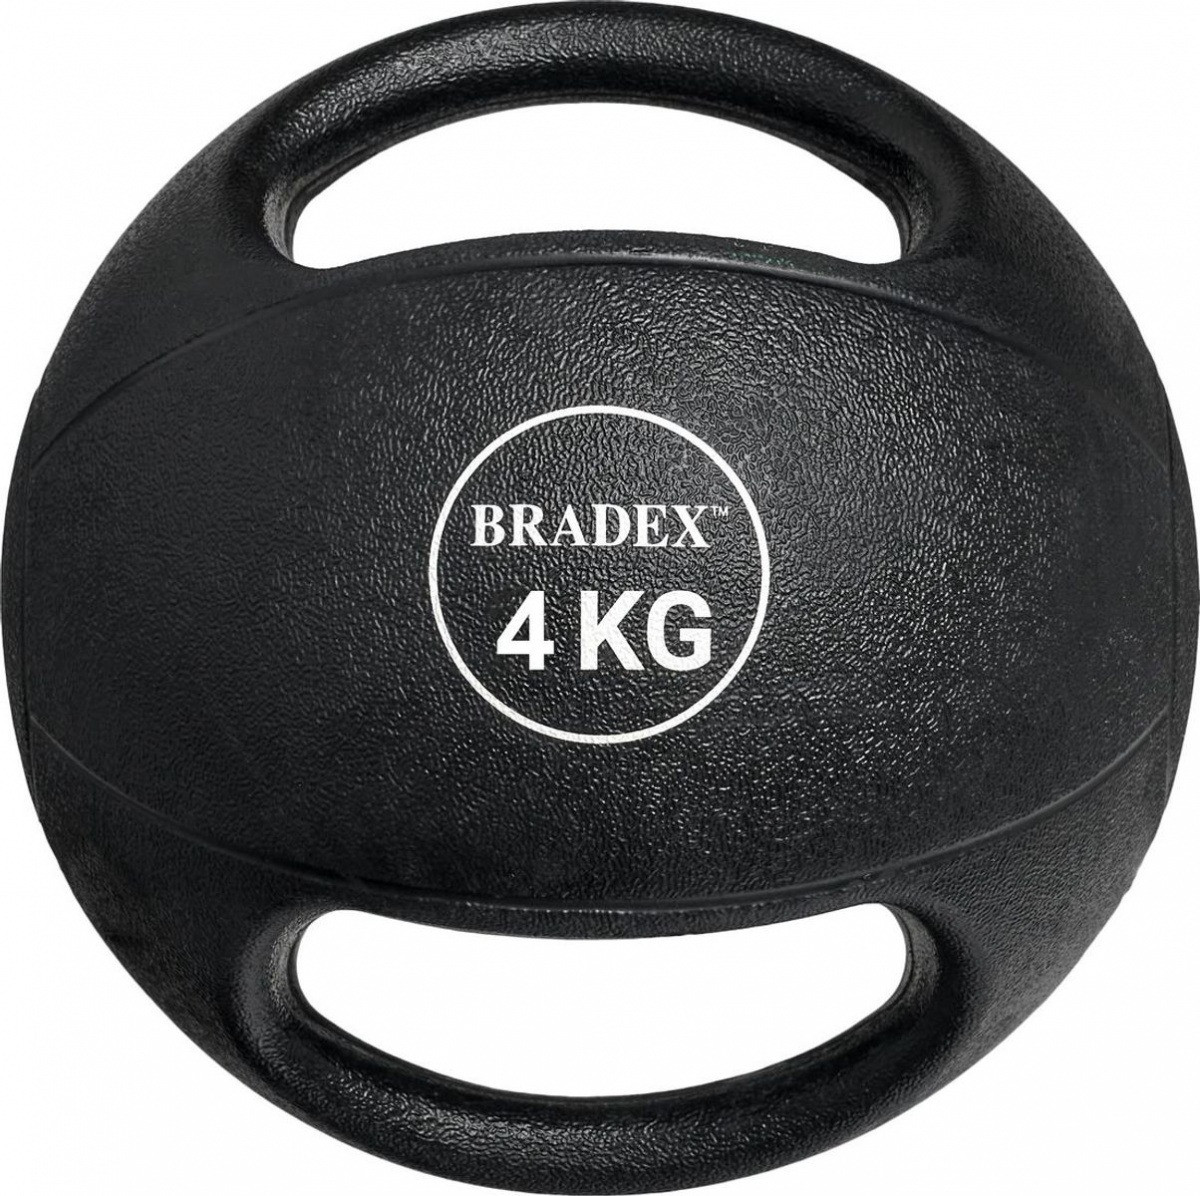 Медбол двуручный, Bradex SF 0763, 4кг (Medicine Ball with Dual Grip 4KG)